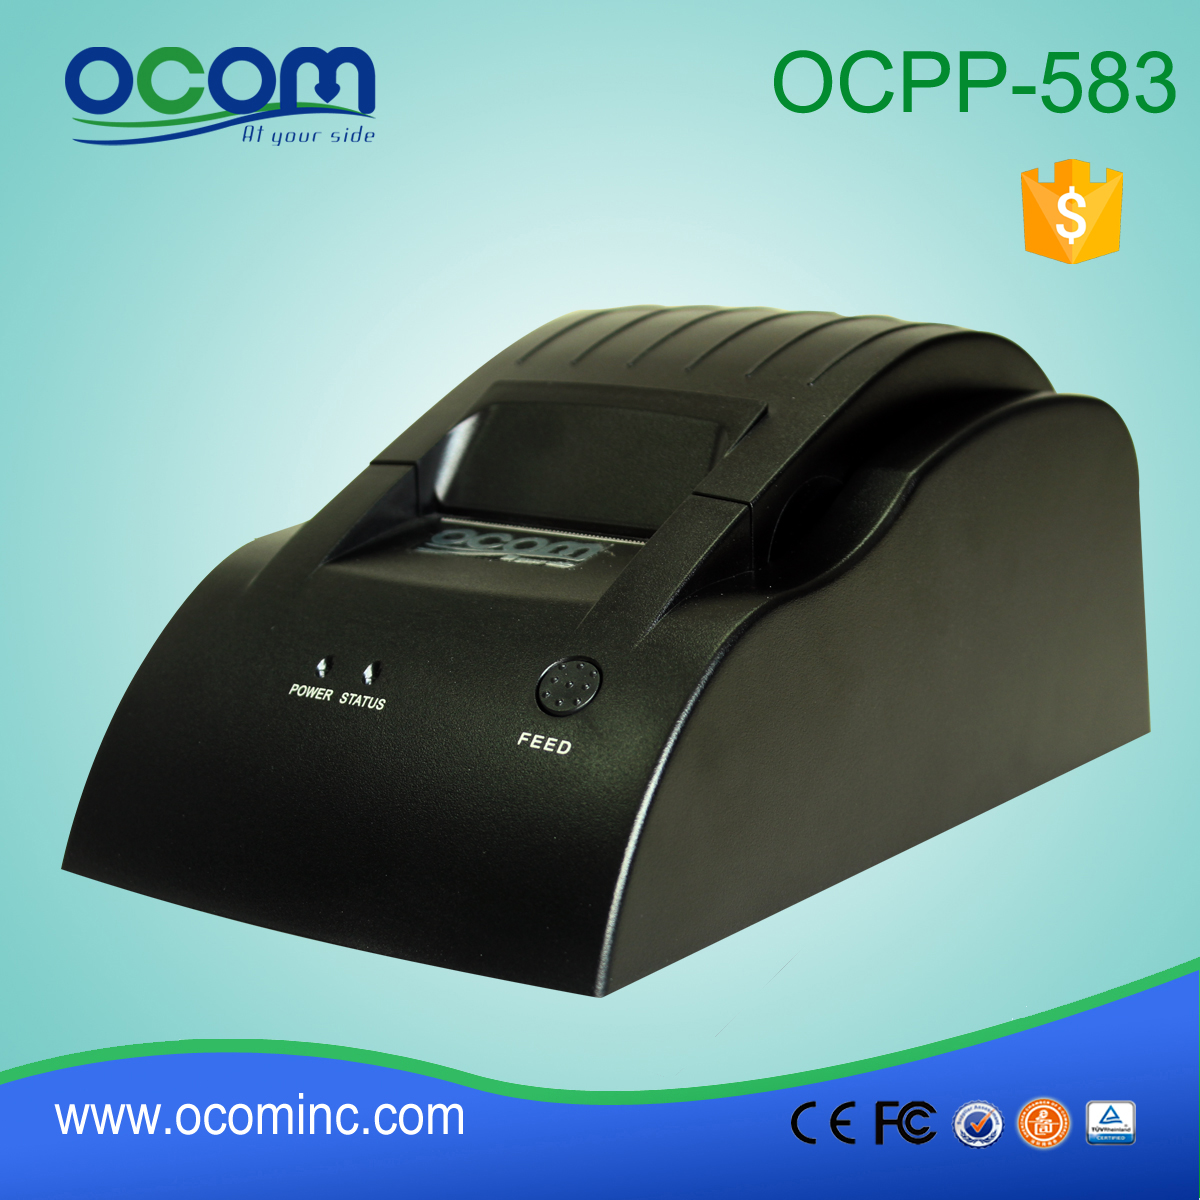 OCPP-583 58MM Direct Thermal Receipt Printer